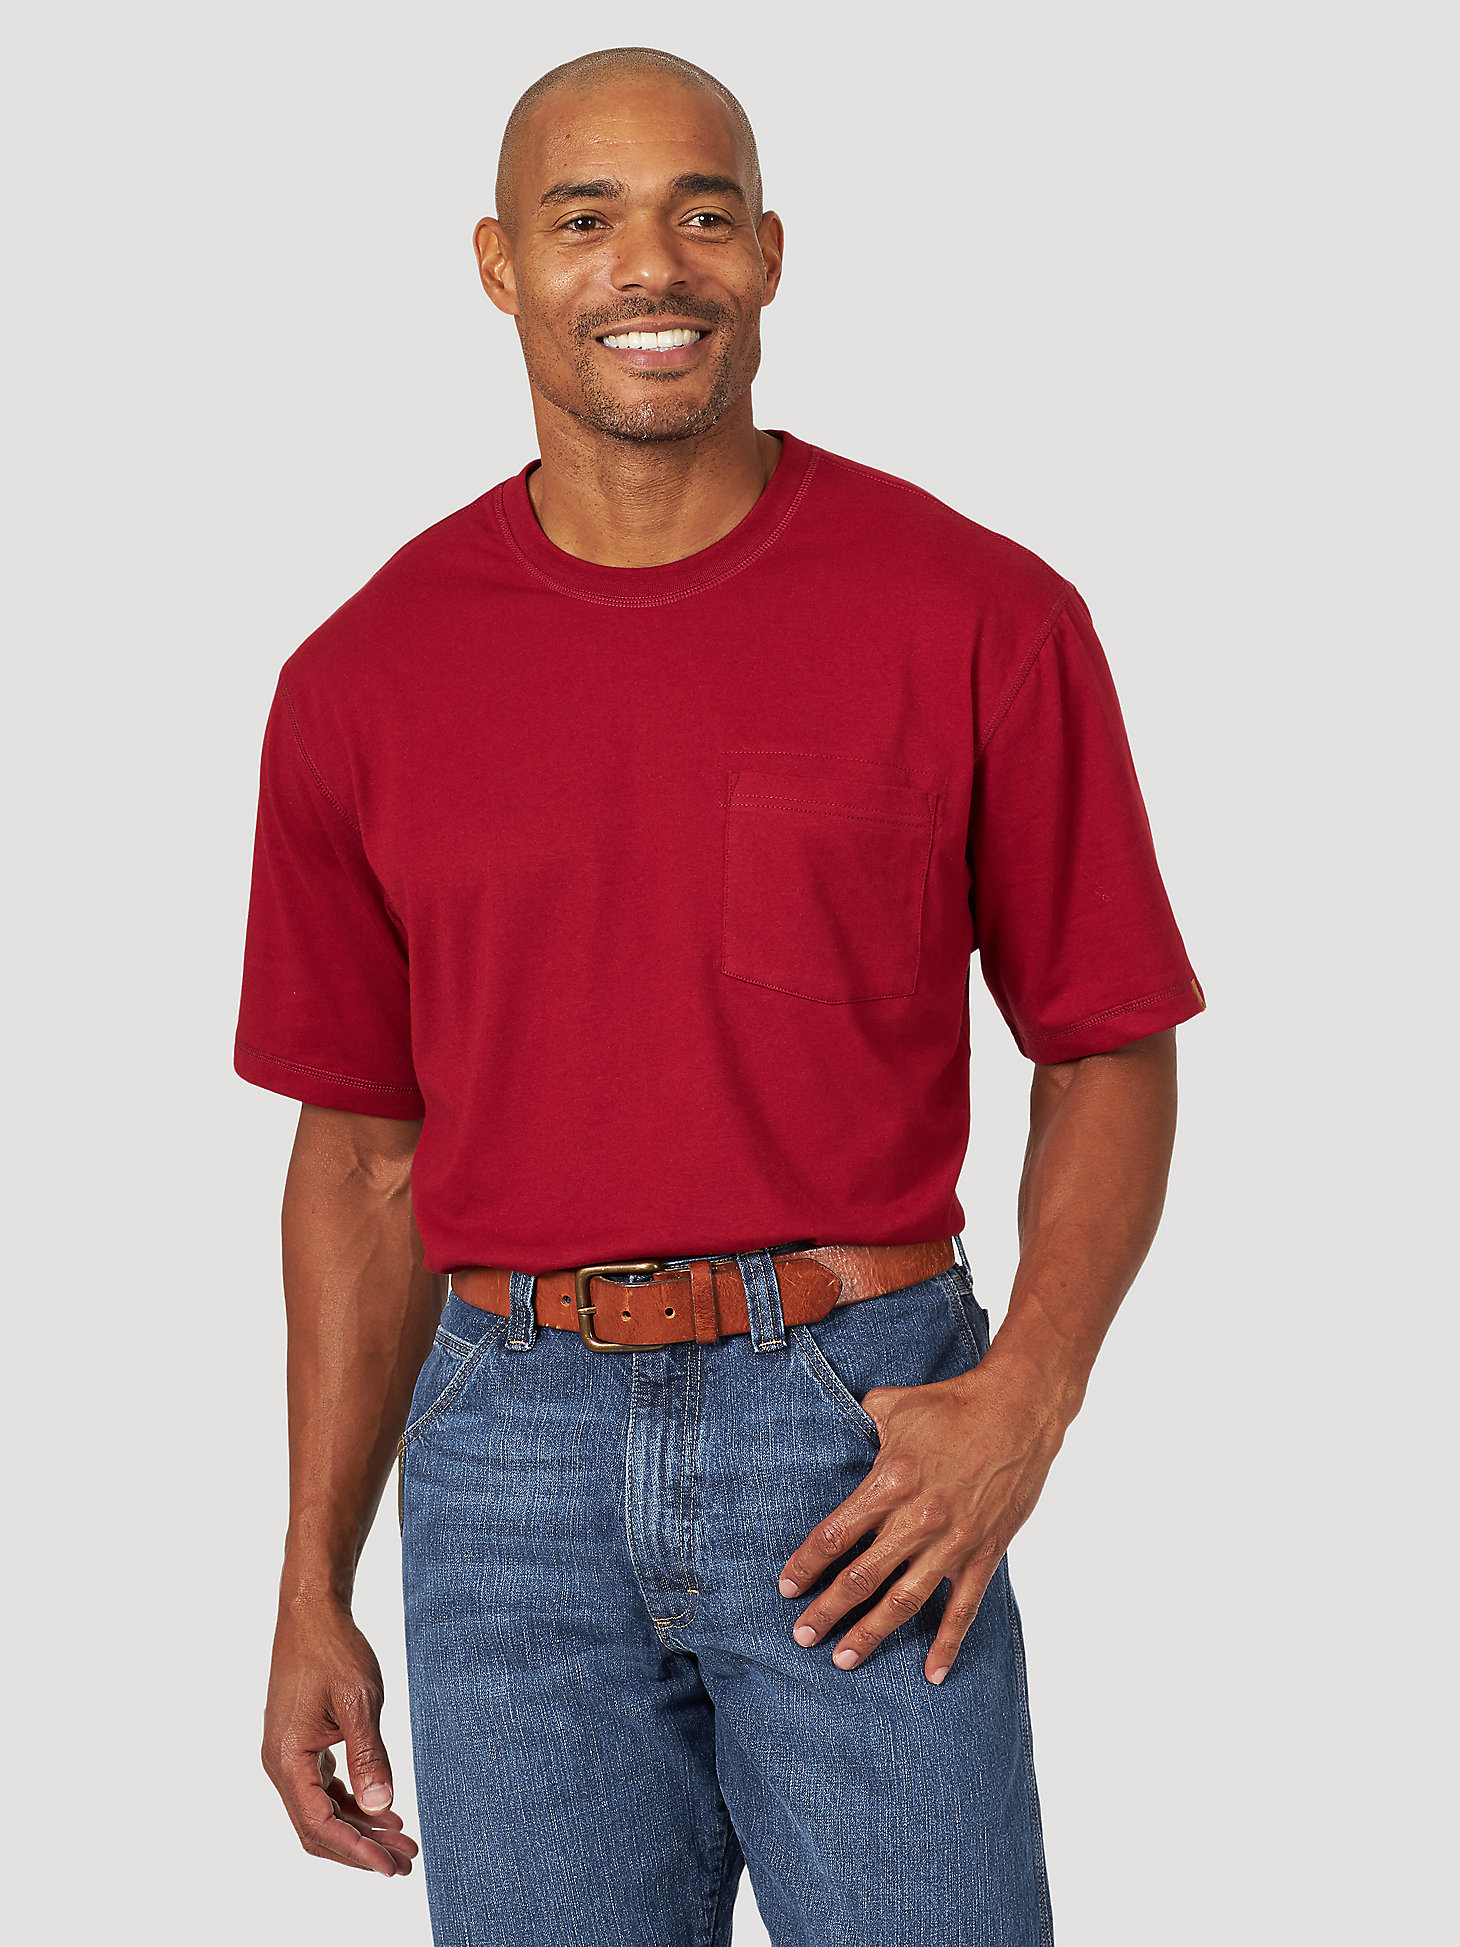 Wrangler Authentics Men's Authentics Short Sleeve Henley Tee Shirt